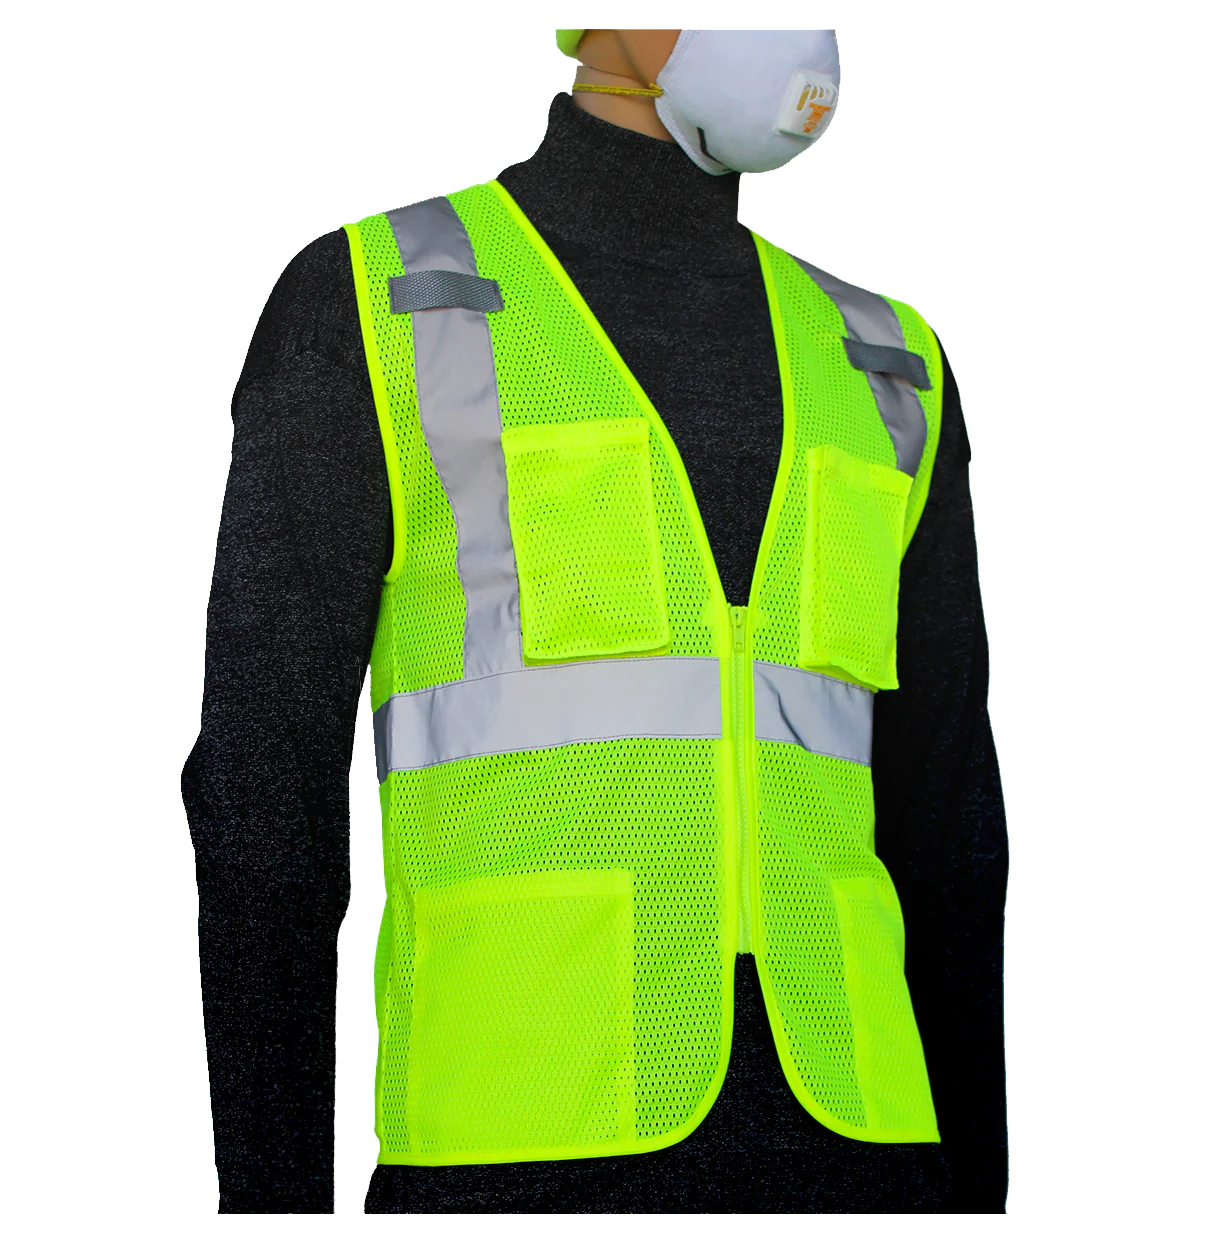 Green Safety Vests at